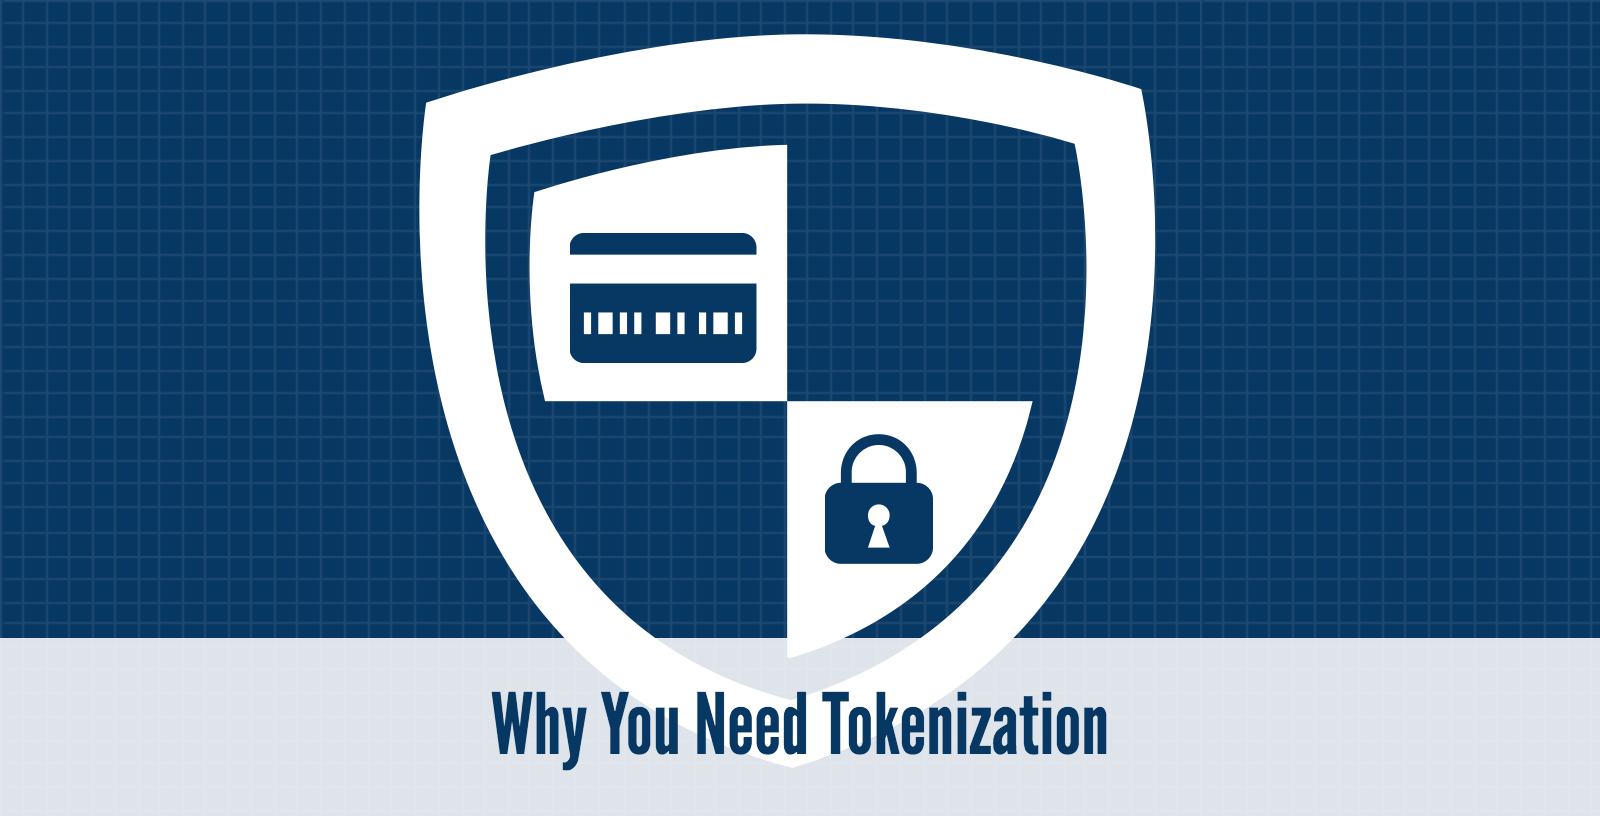 Tokenization/Security